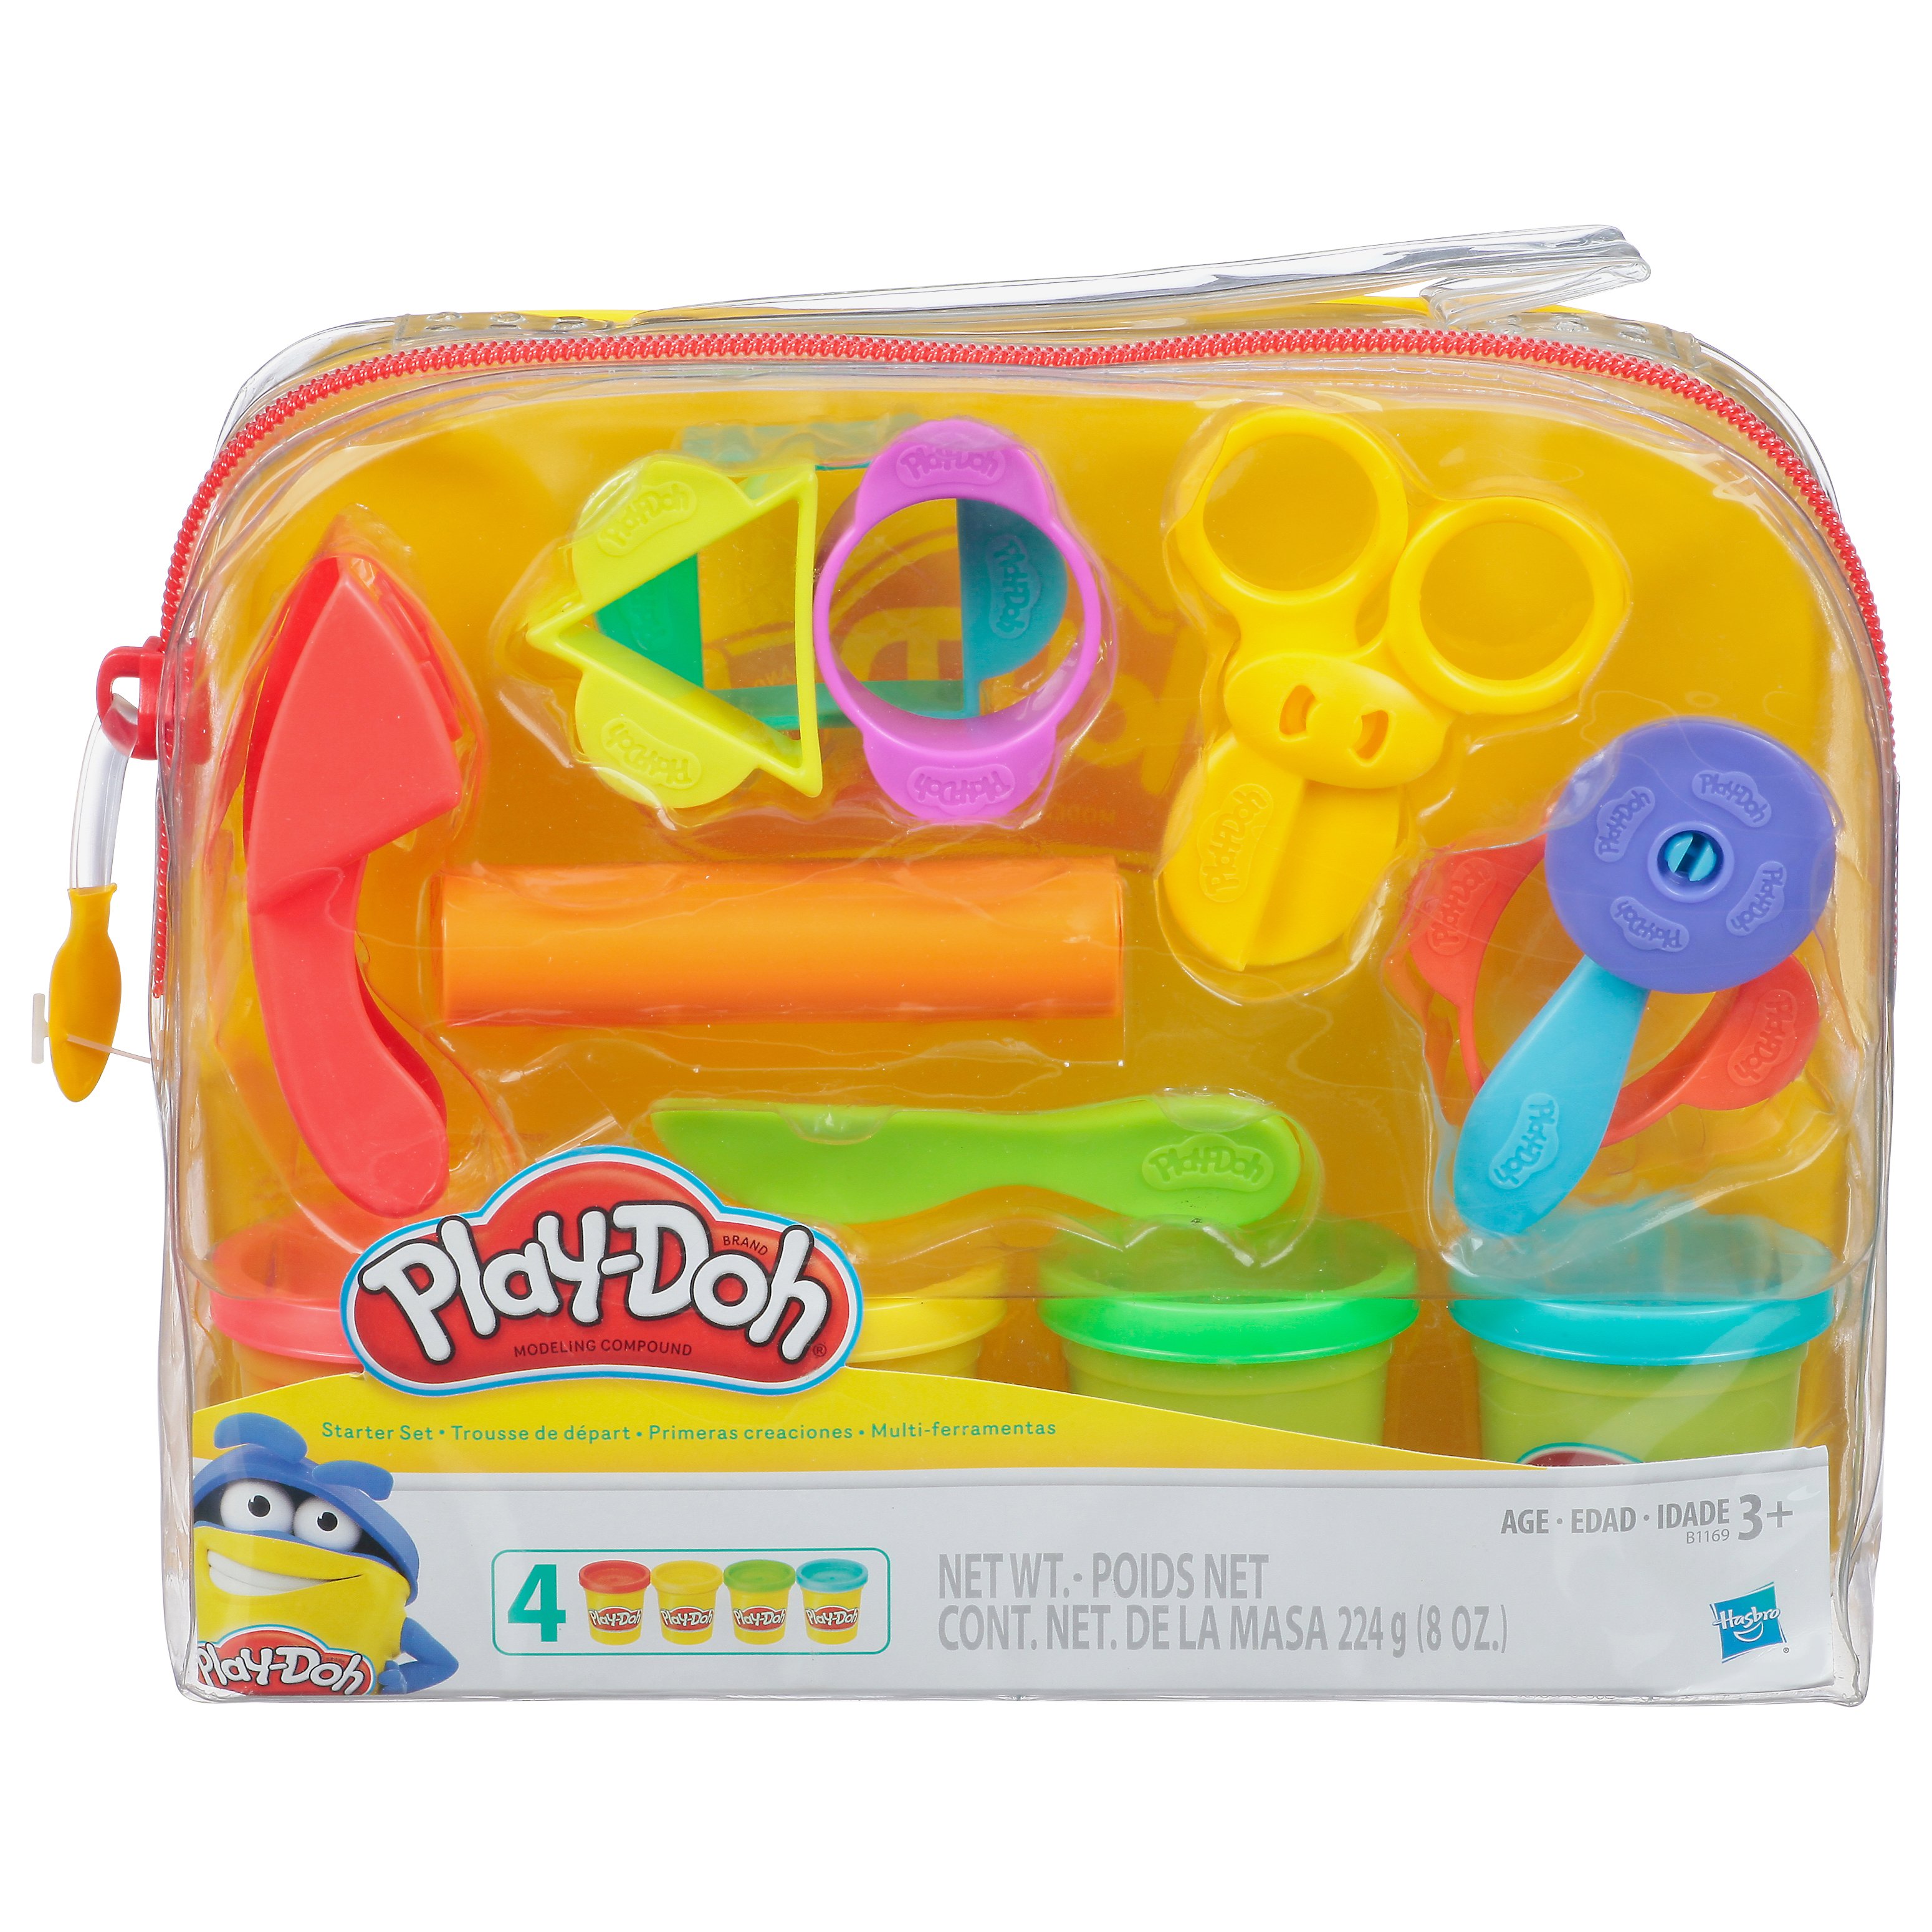 Play-Doh Starter Set - Shop Clay at H-E-B